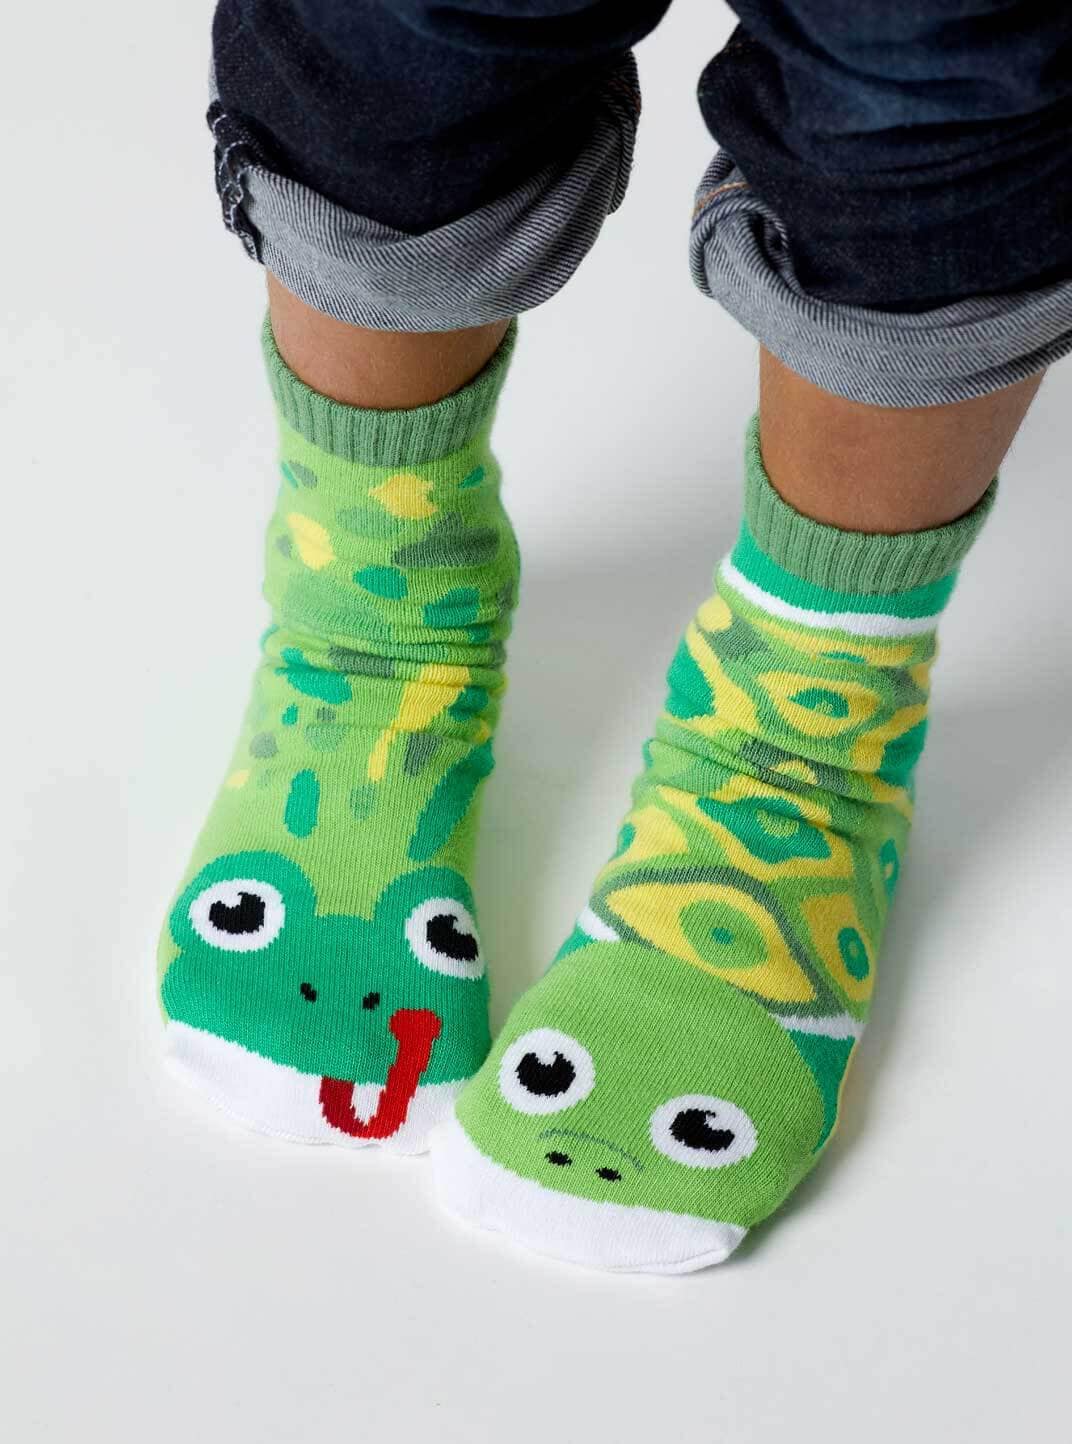 Night Frogs Men's Socks  Fun Novelty Socks for Him - Cute But